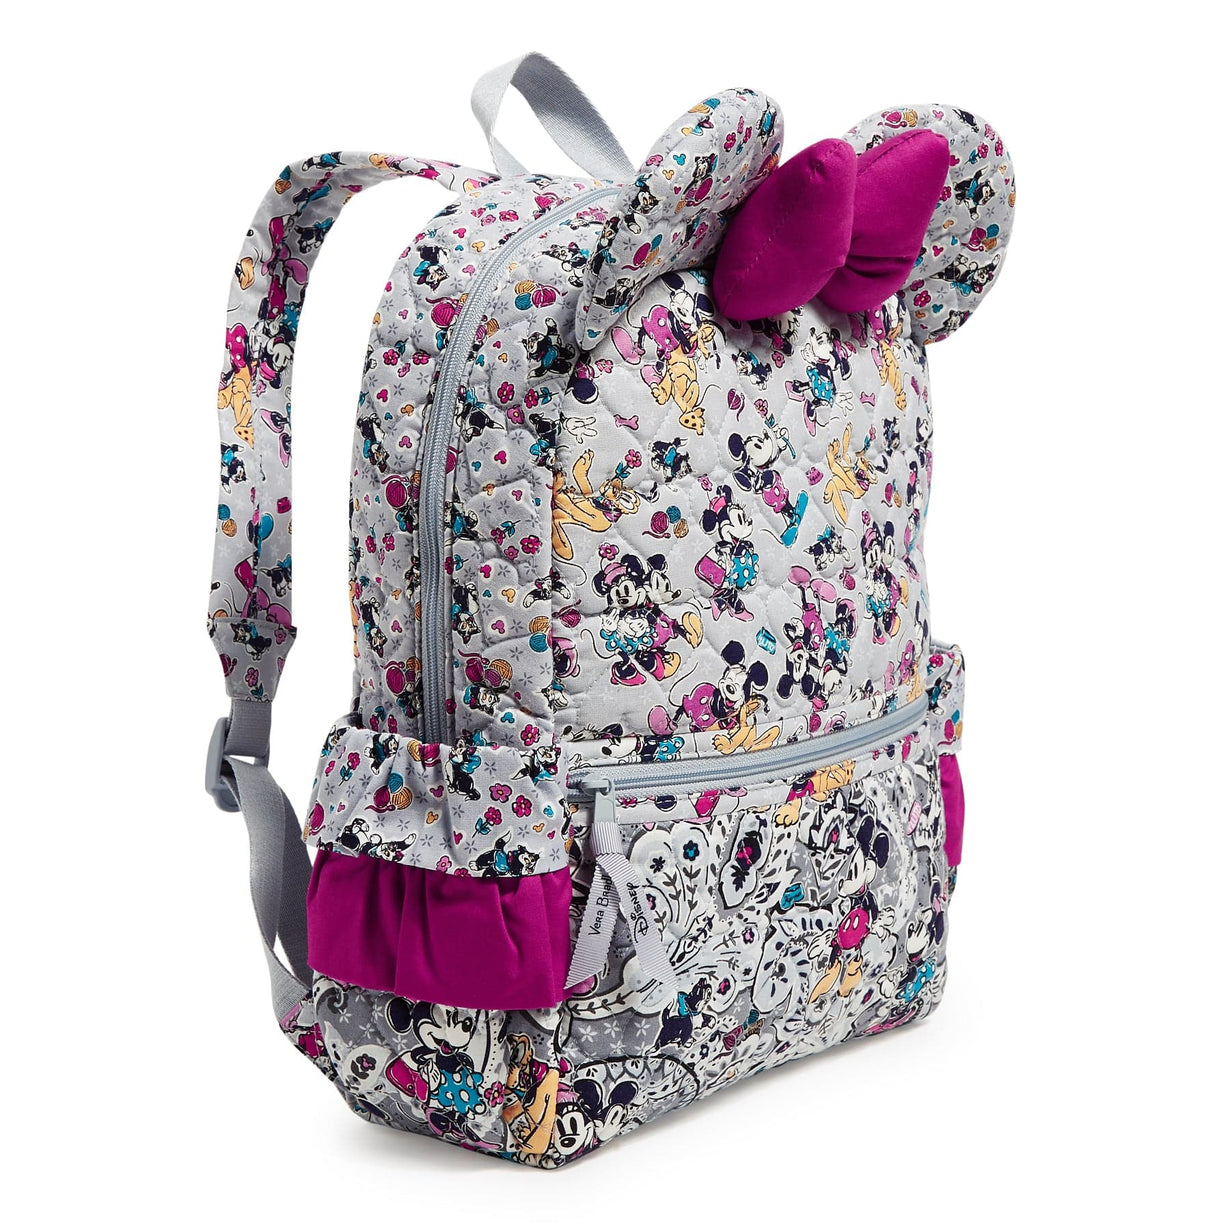 Friends Central Perk Mini Backpack, Small Bookbag, Pink